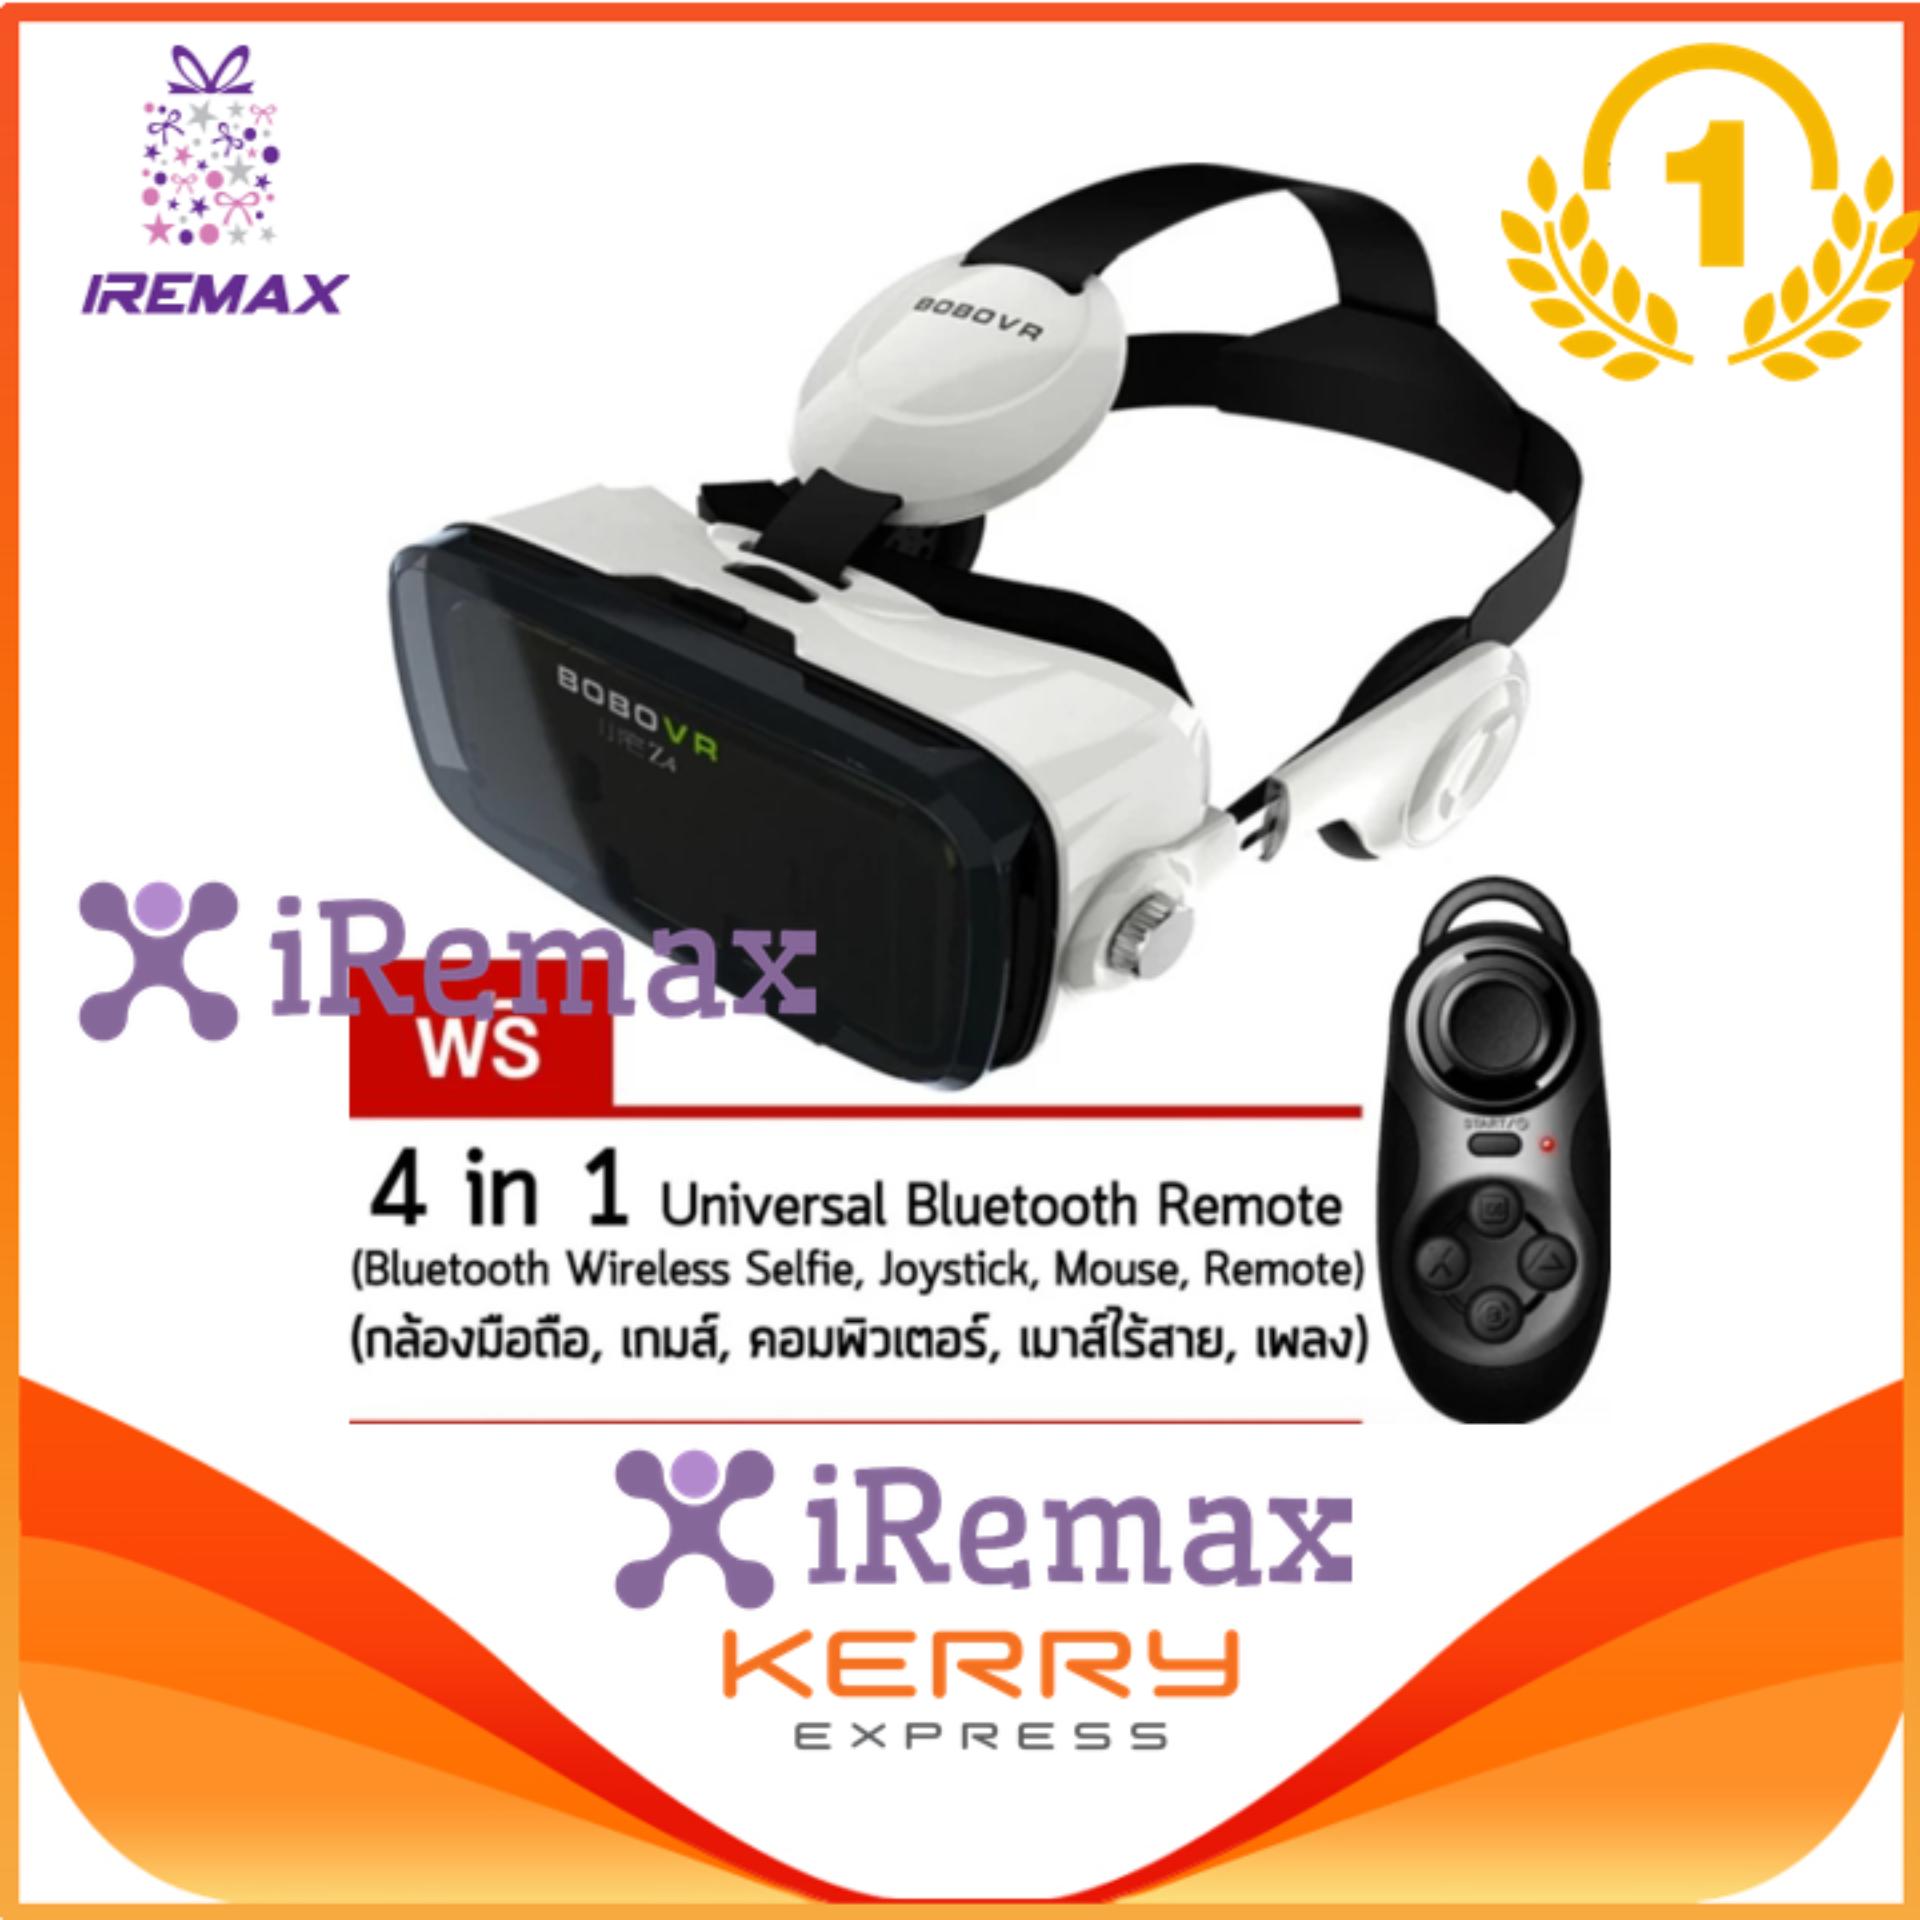 iremax VR BOBOVR Z4 3D VR Glasses with Stereo Headphone Virtual Reality Headset แว่นตาดูหนัง 3D อัจฉริยะ สำหรับโทรศัพท์สมาร์ทโฟนทุกรุ่น (สีขาว) แถมฟรี 4 in 1 Bluetooth Wireless Selfie, Joystick, Mouse ,Remote (price:390-)